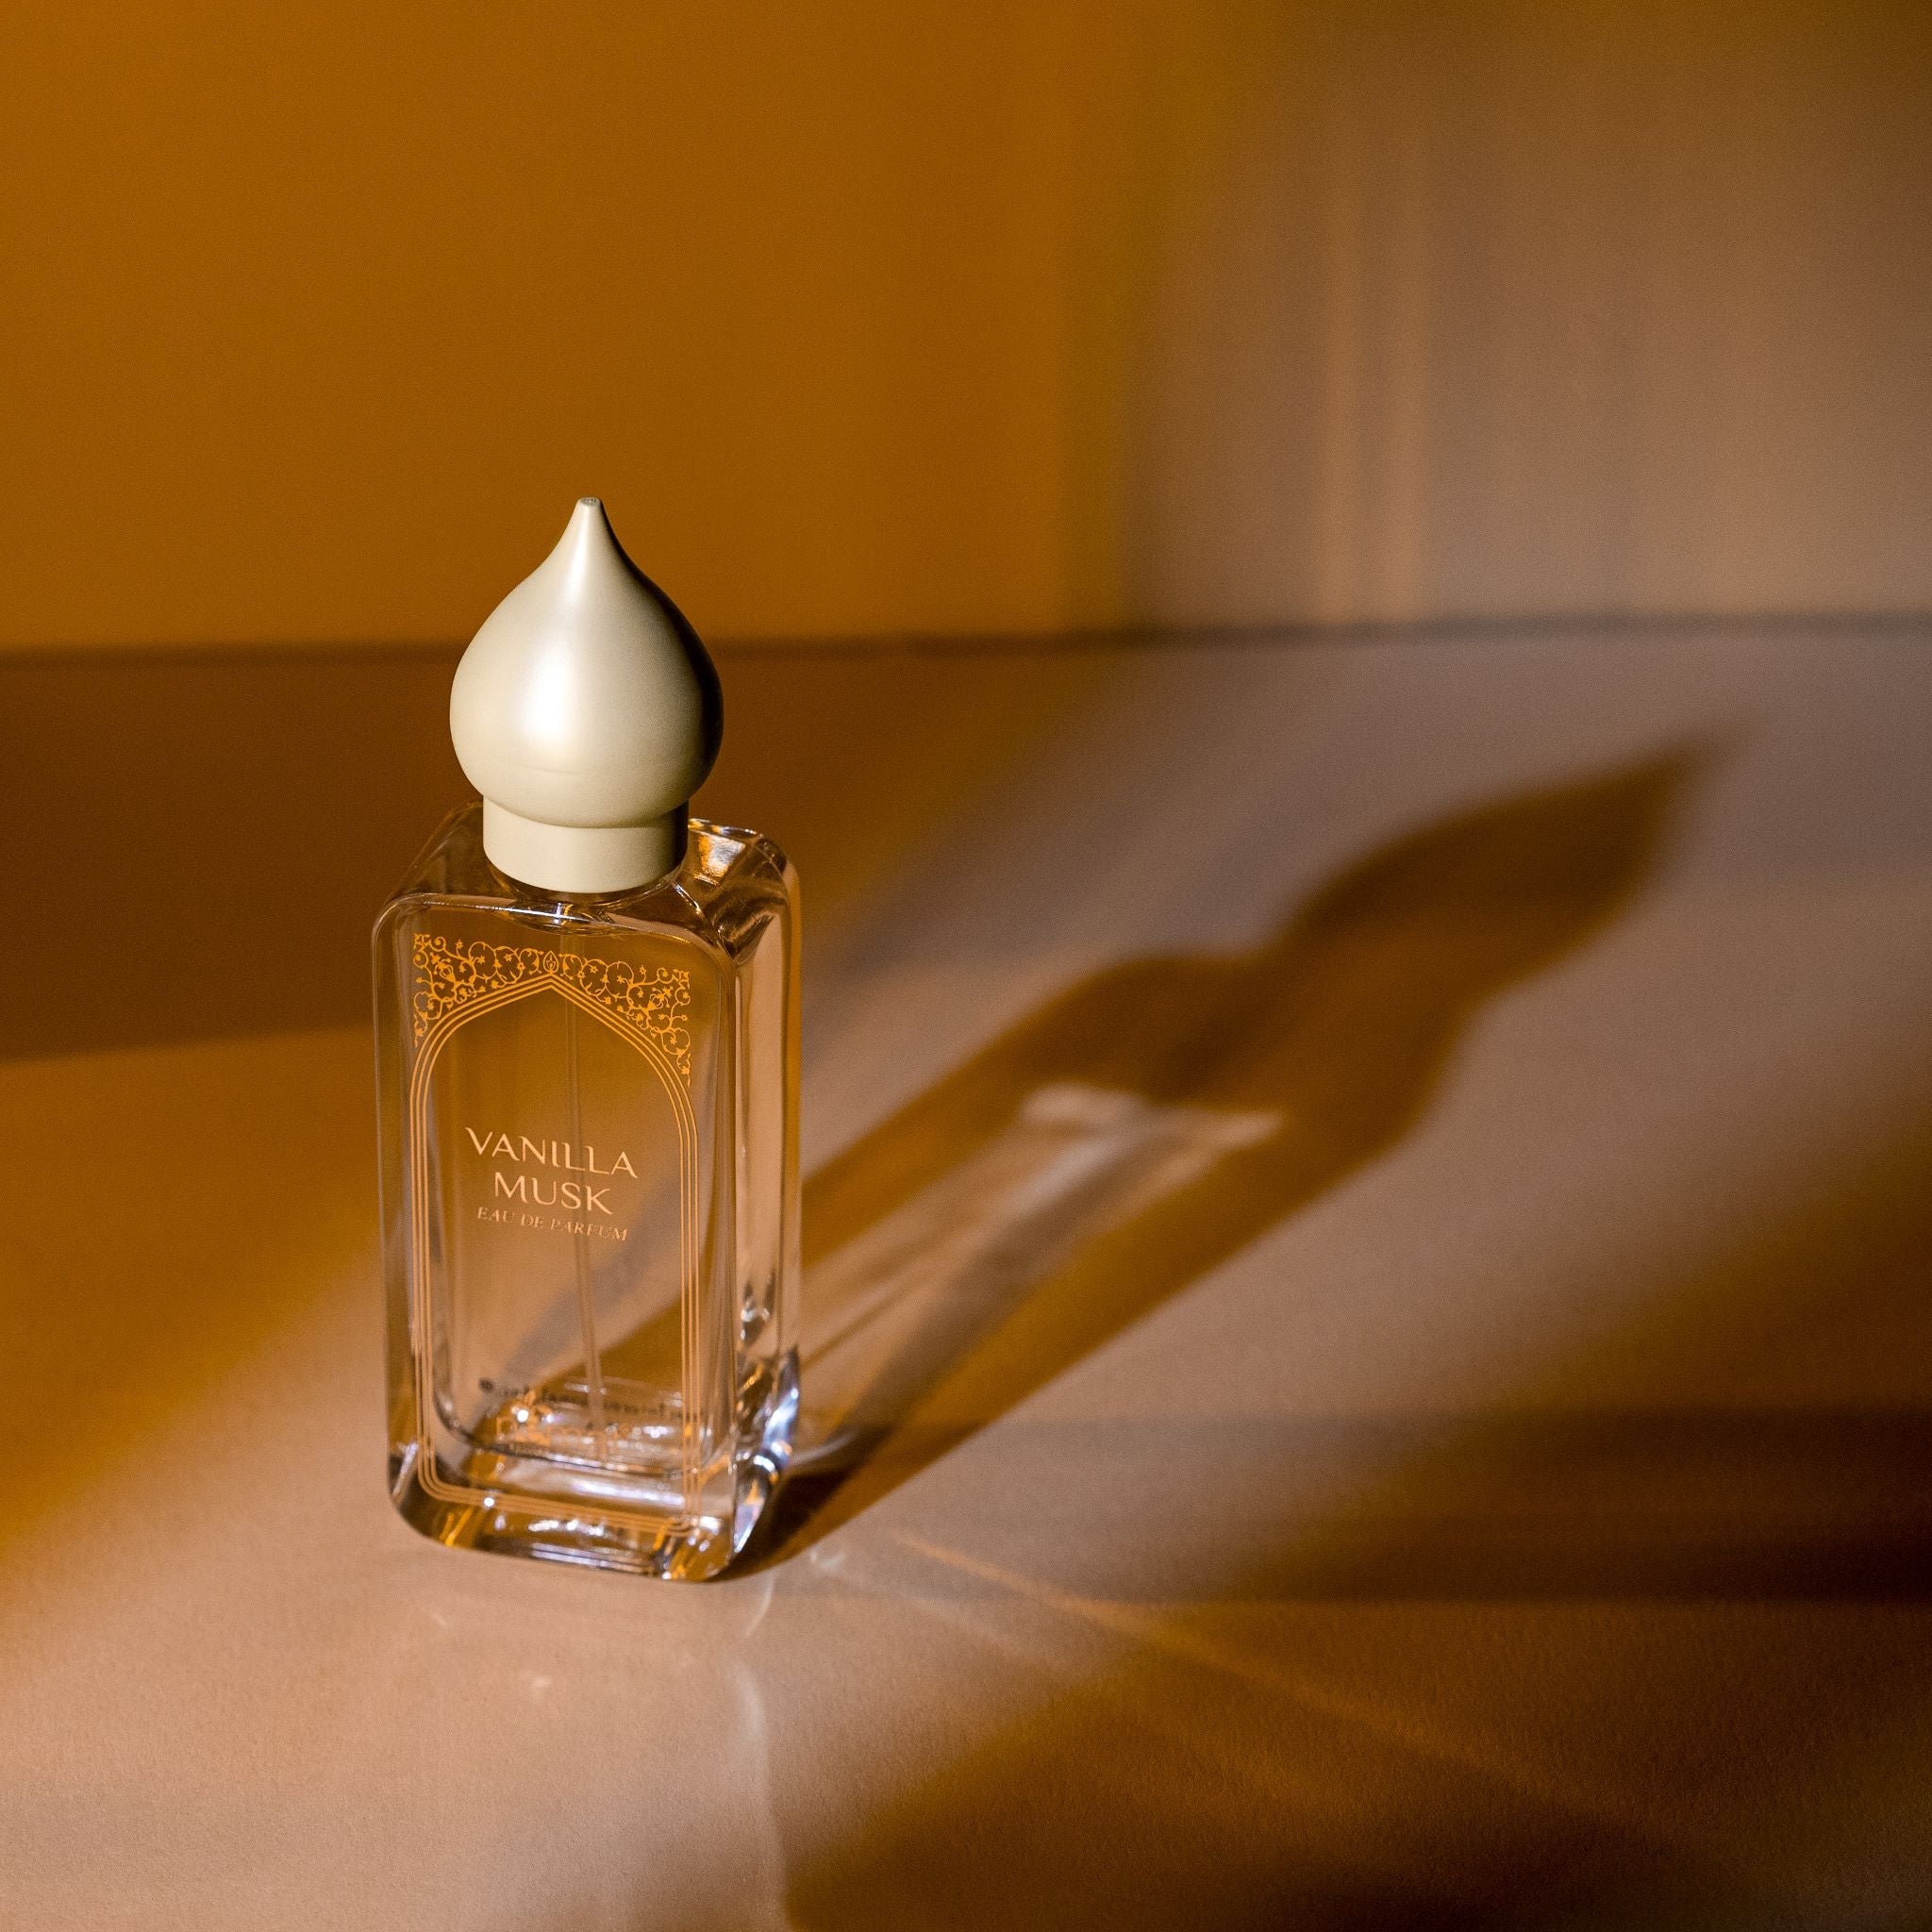 Nemat Vanilla Musk Eau de Parfum 50 ml